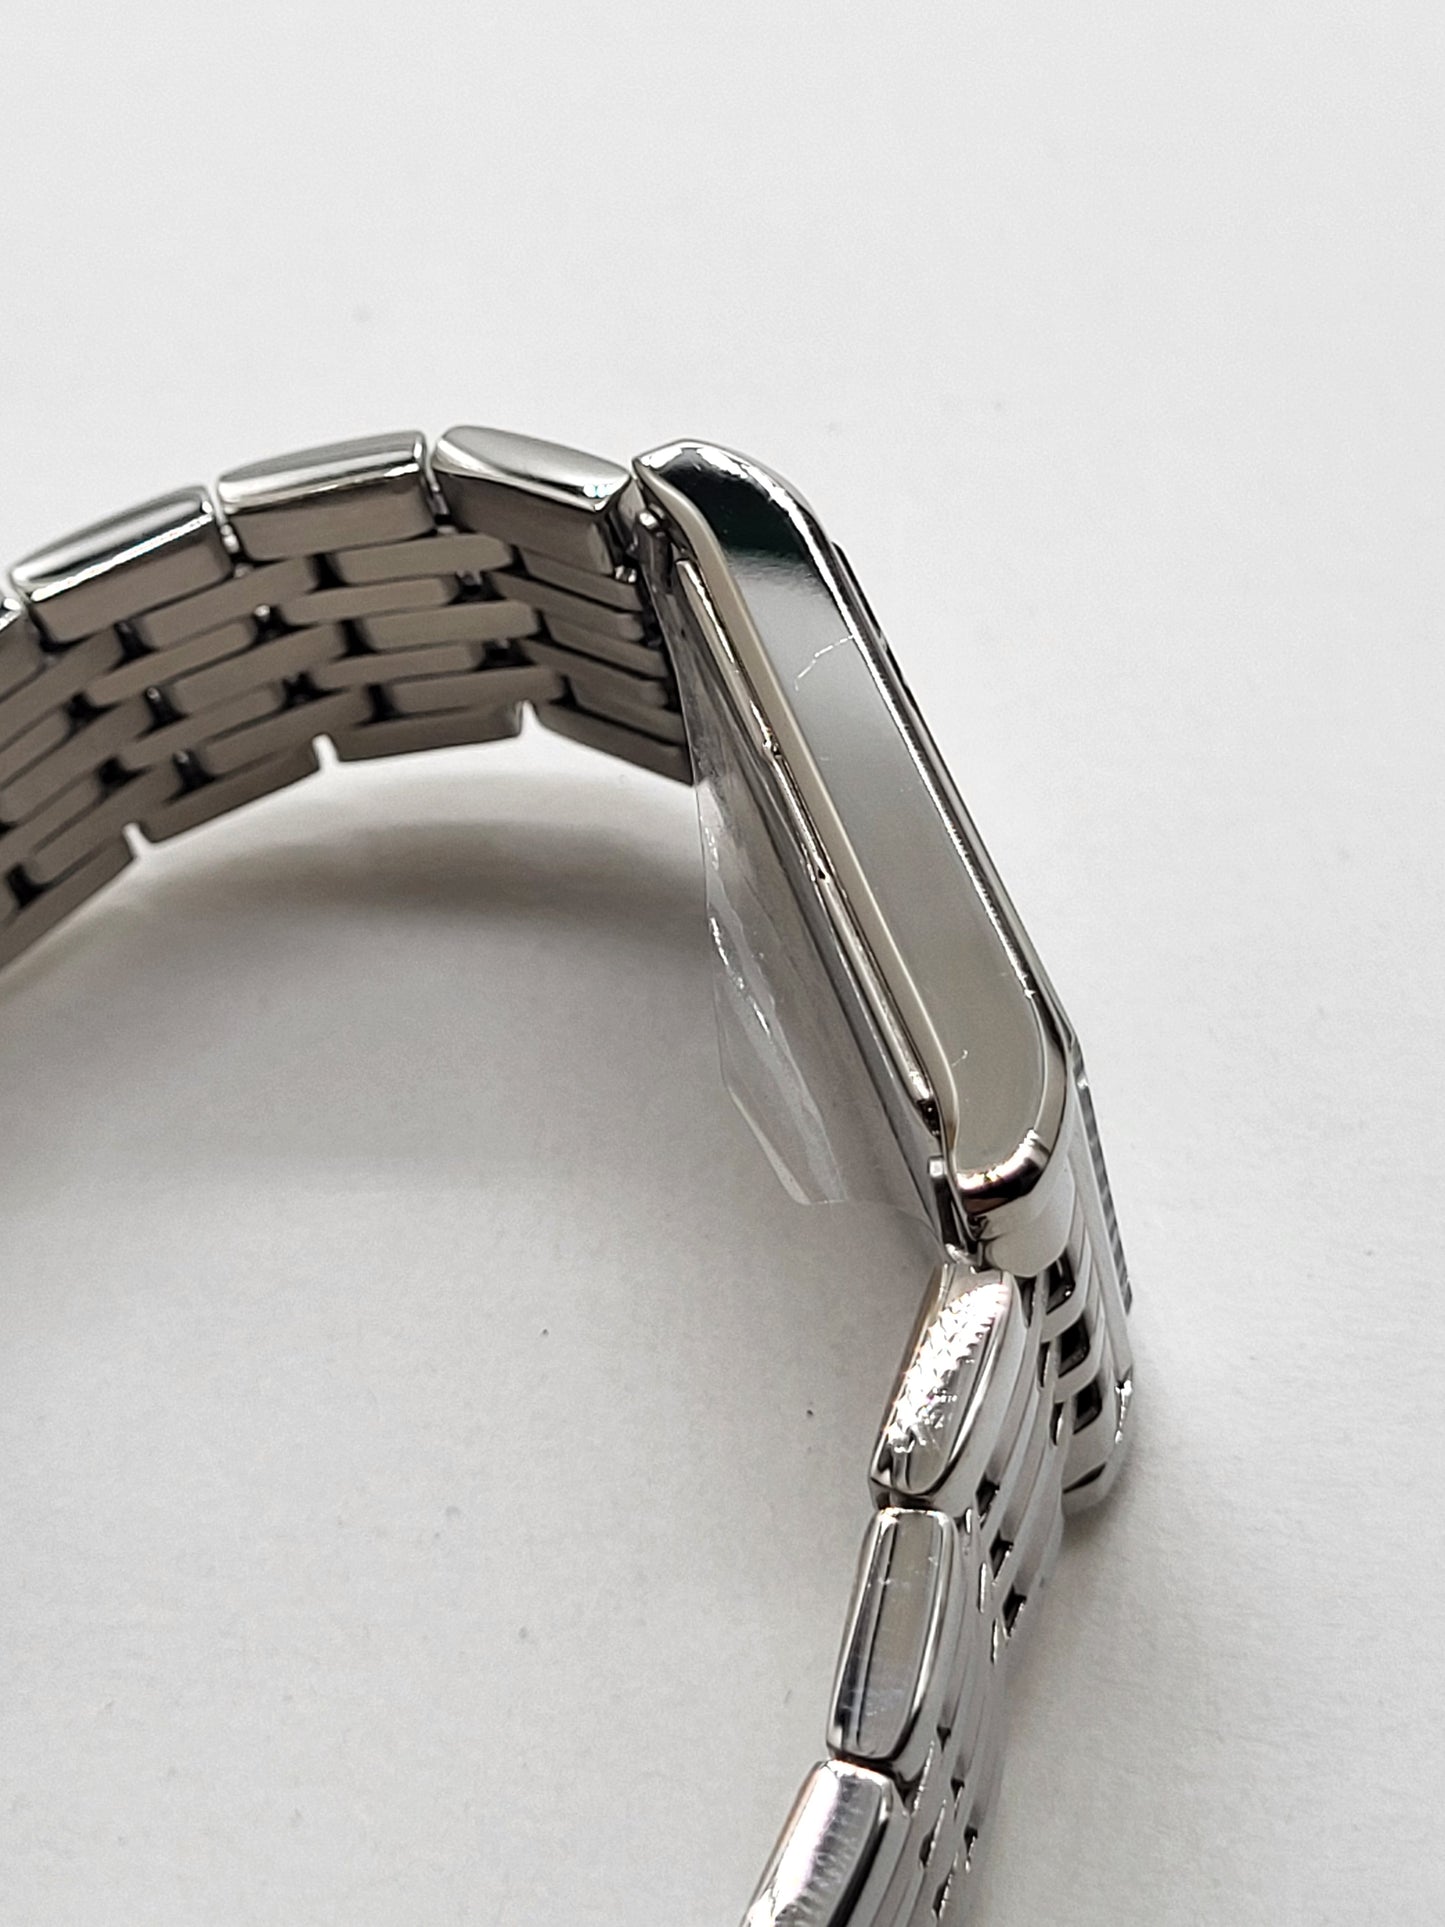 Citizen - Stainless Steel Men's Quartz Watch + Bracelet - BH3000-68E